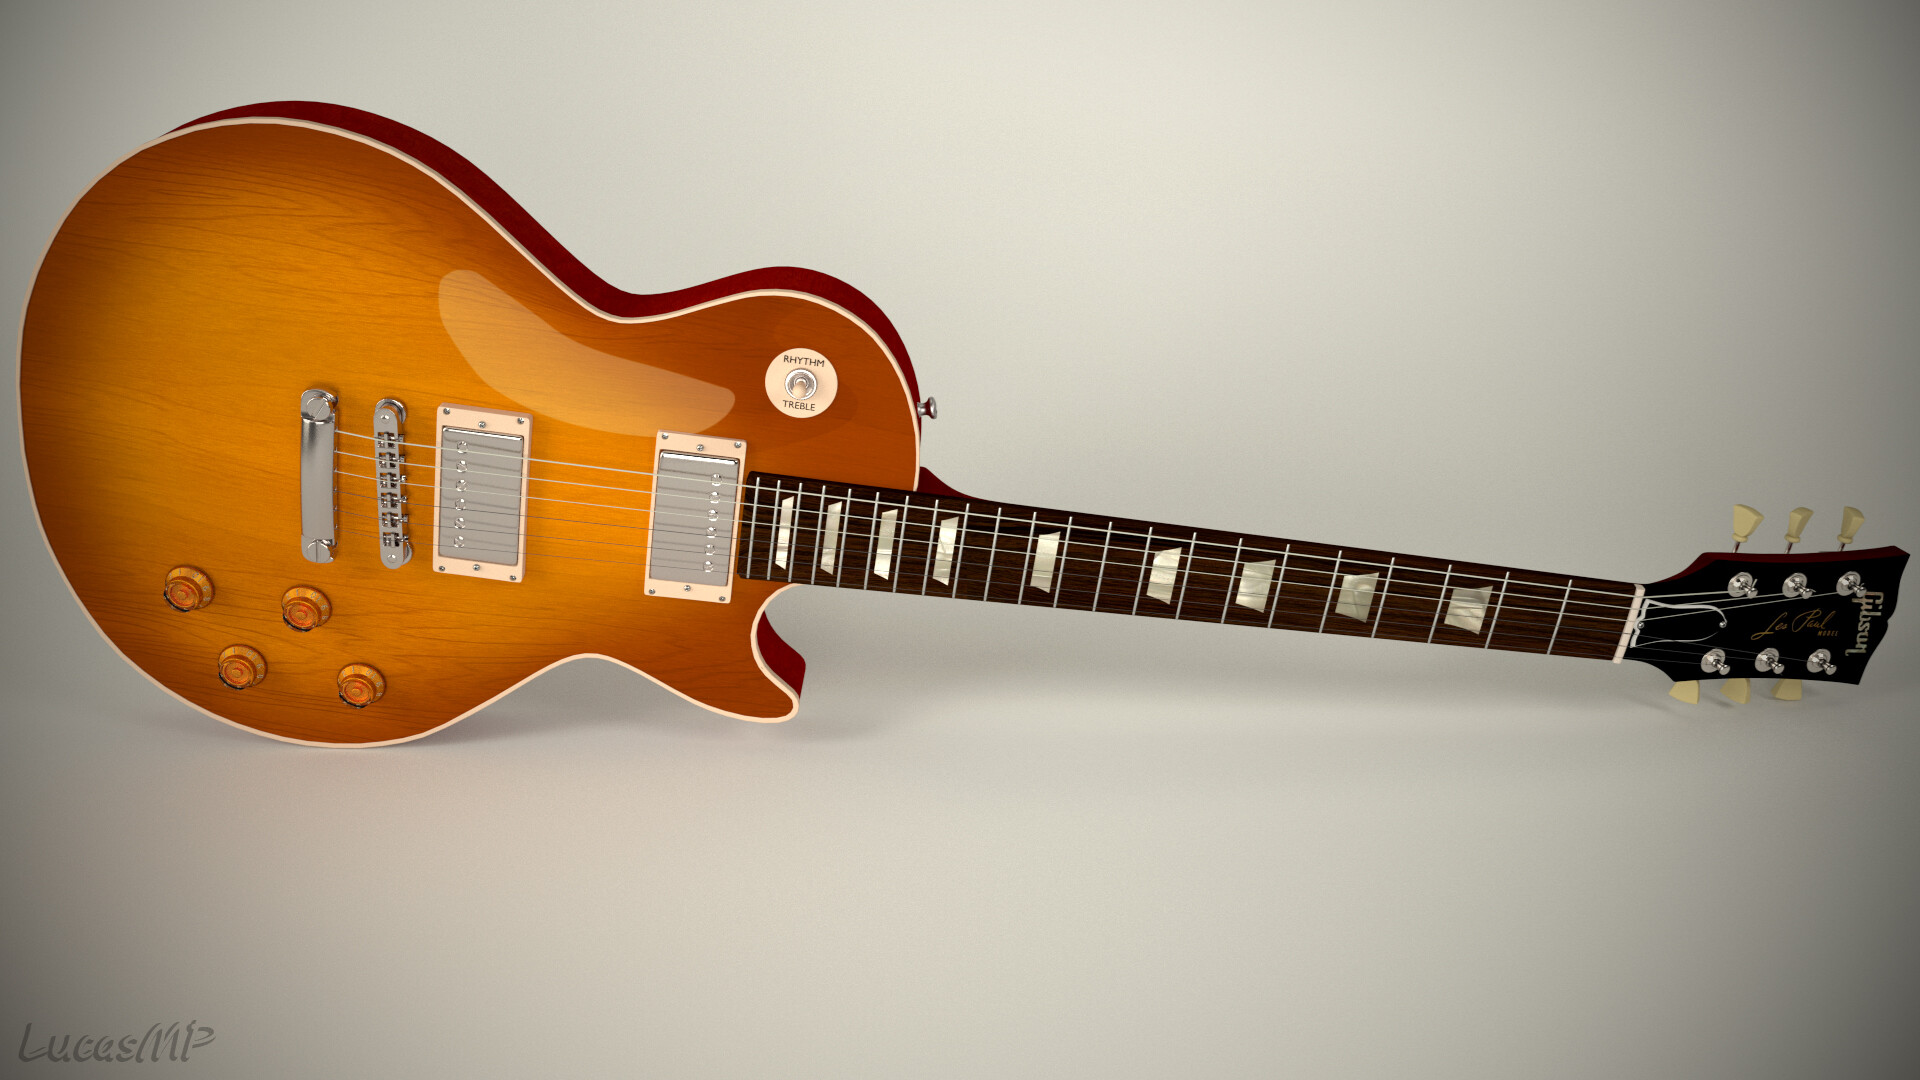 Gibson Guitar: Vintage Reissued V100IT Flamed Iced Tea, Musical instrument. 1920x1080 Full HD Wallpaper.